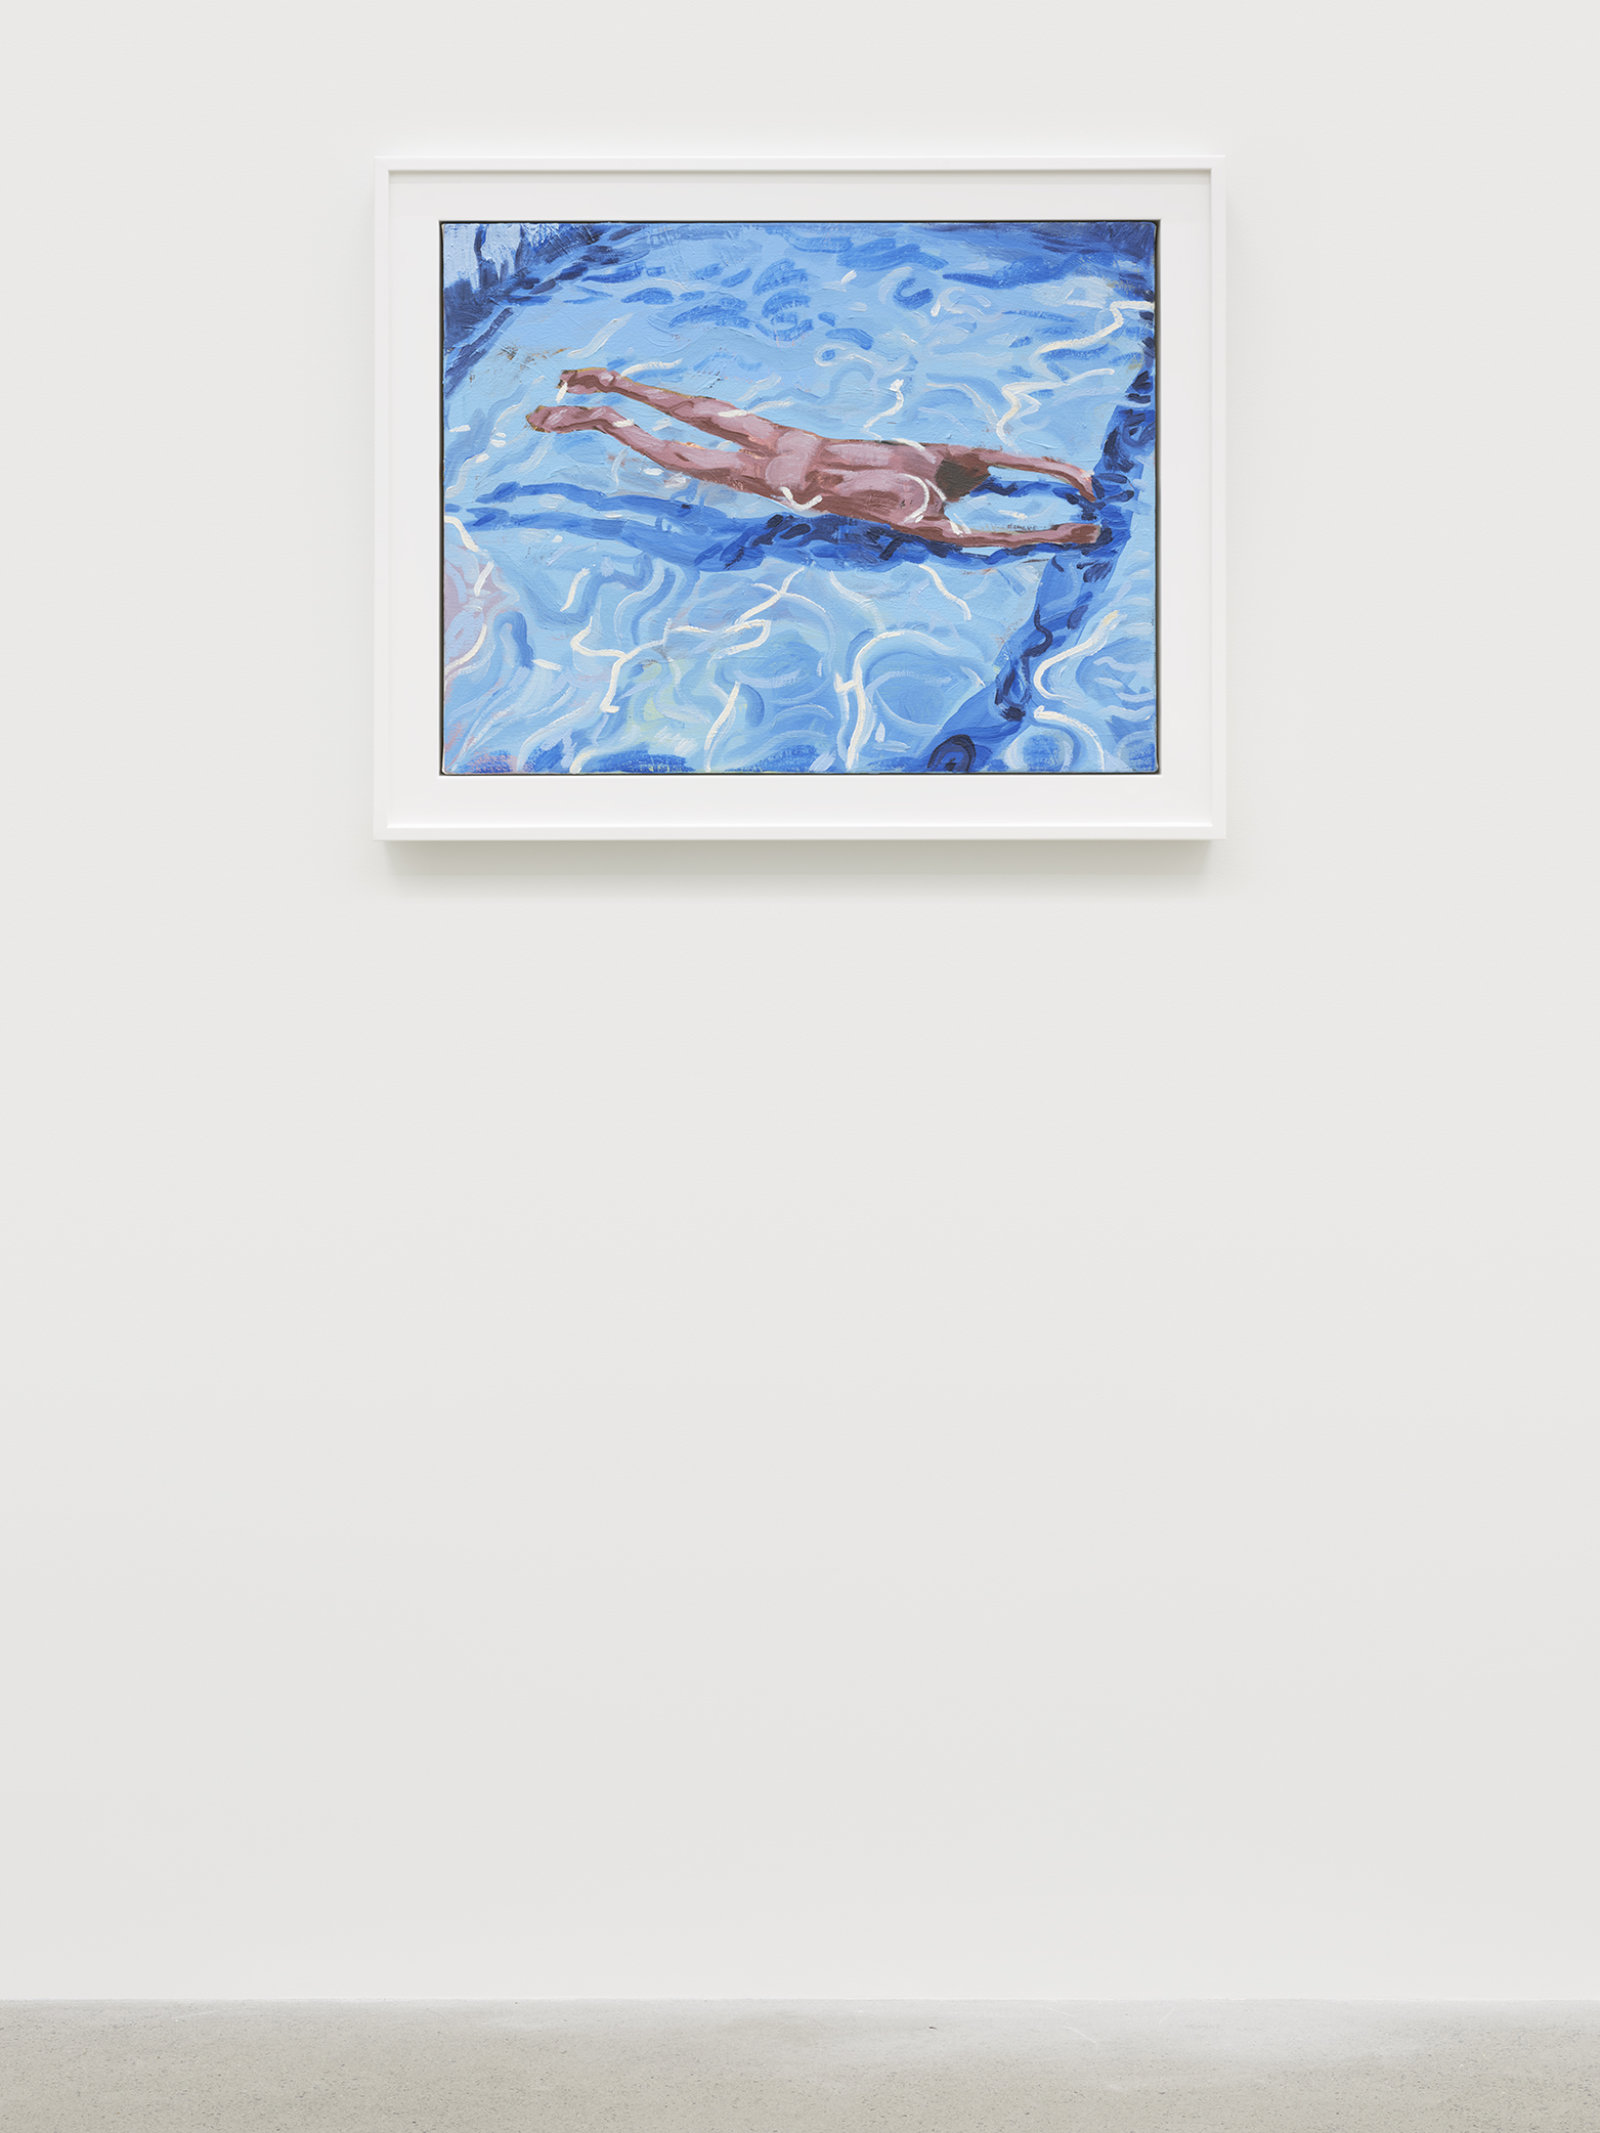 Damian Moppett, Untitled (Blue Pool), 2020, oil on canvas, 20 x 25 in. (51 x 64 cm)